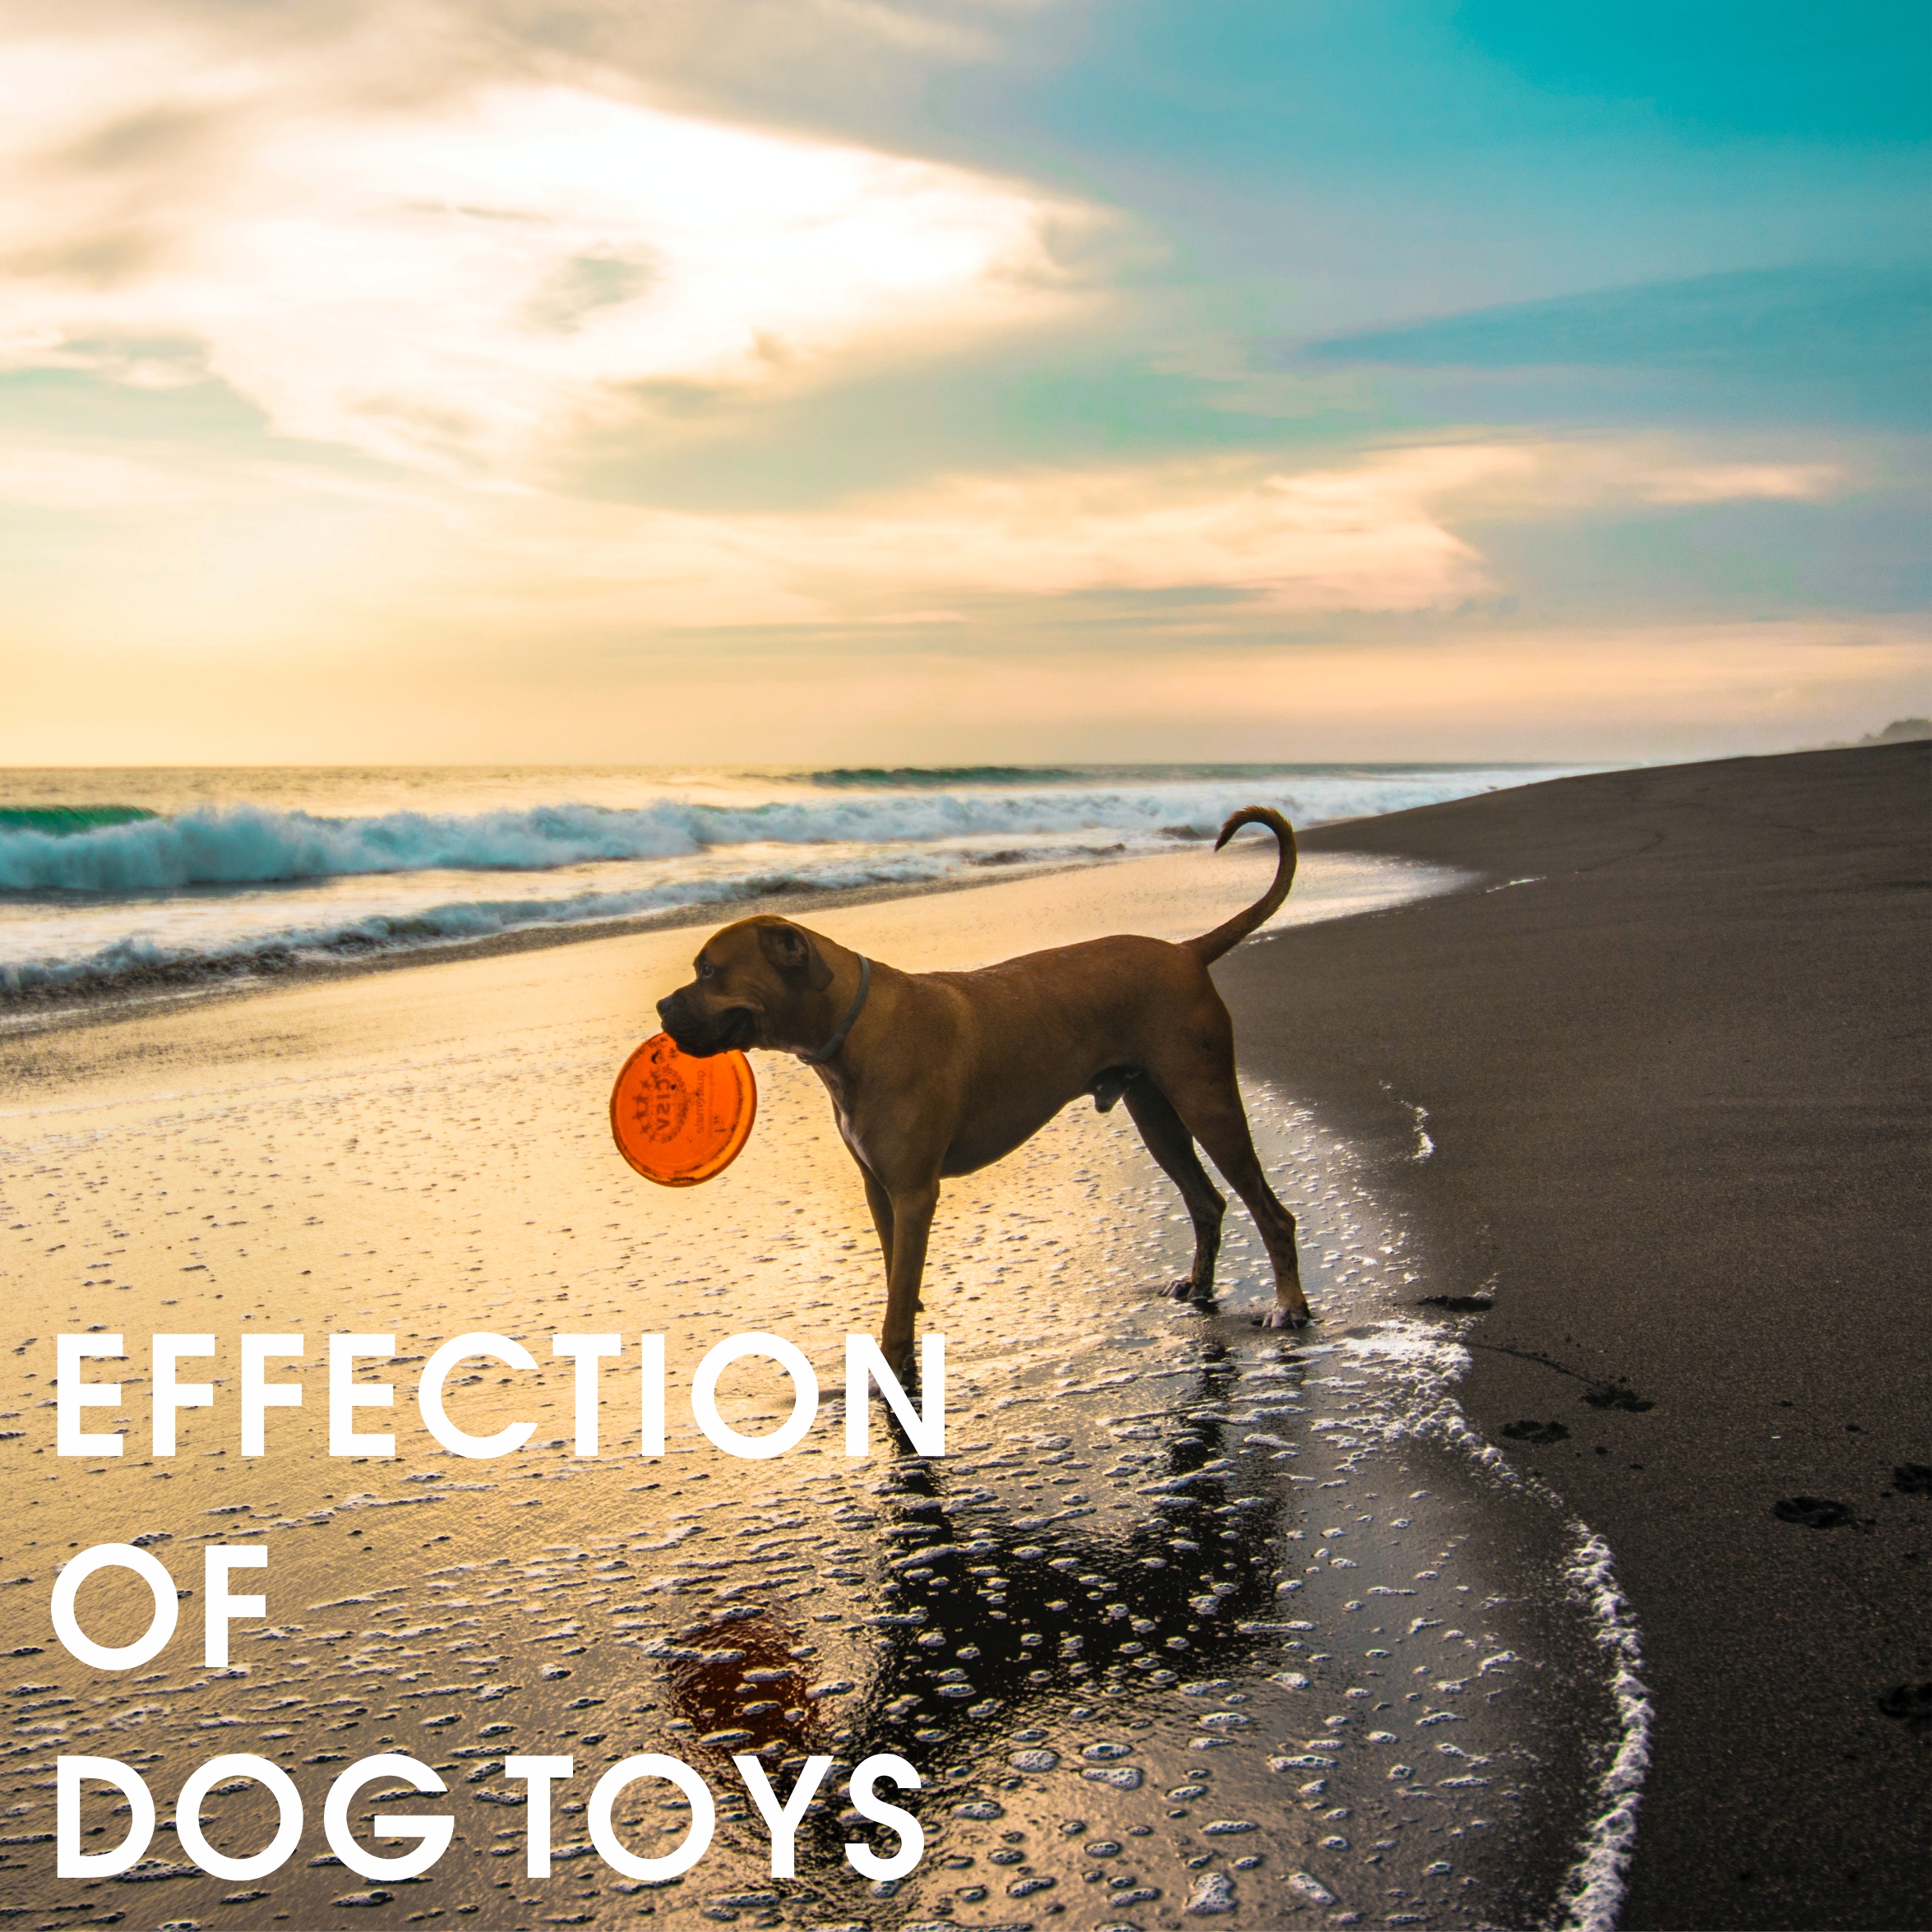 Effection of dog toys